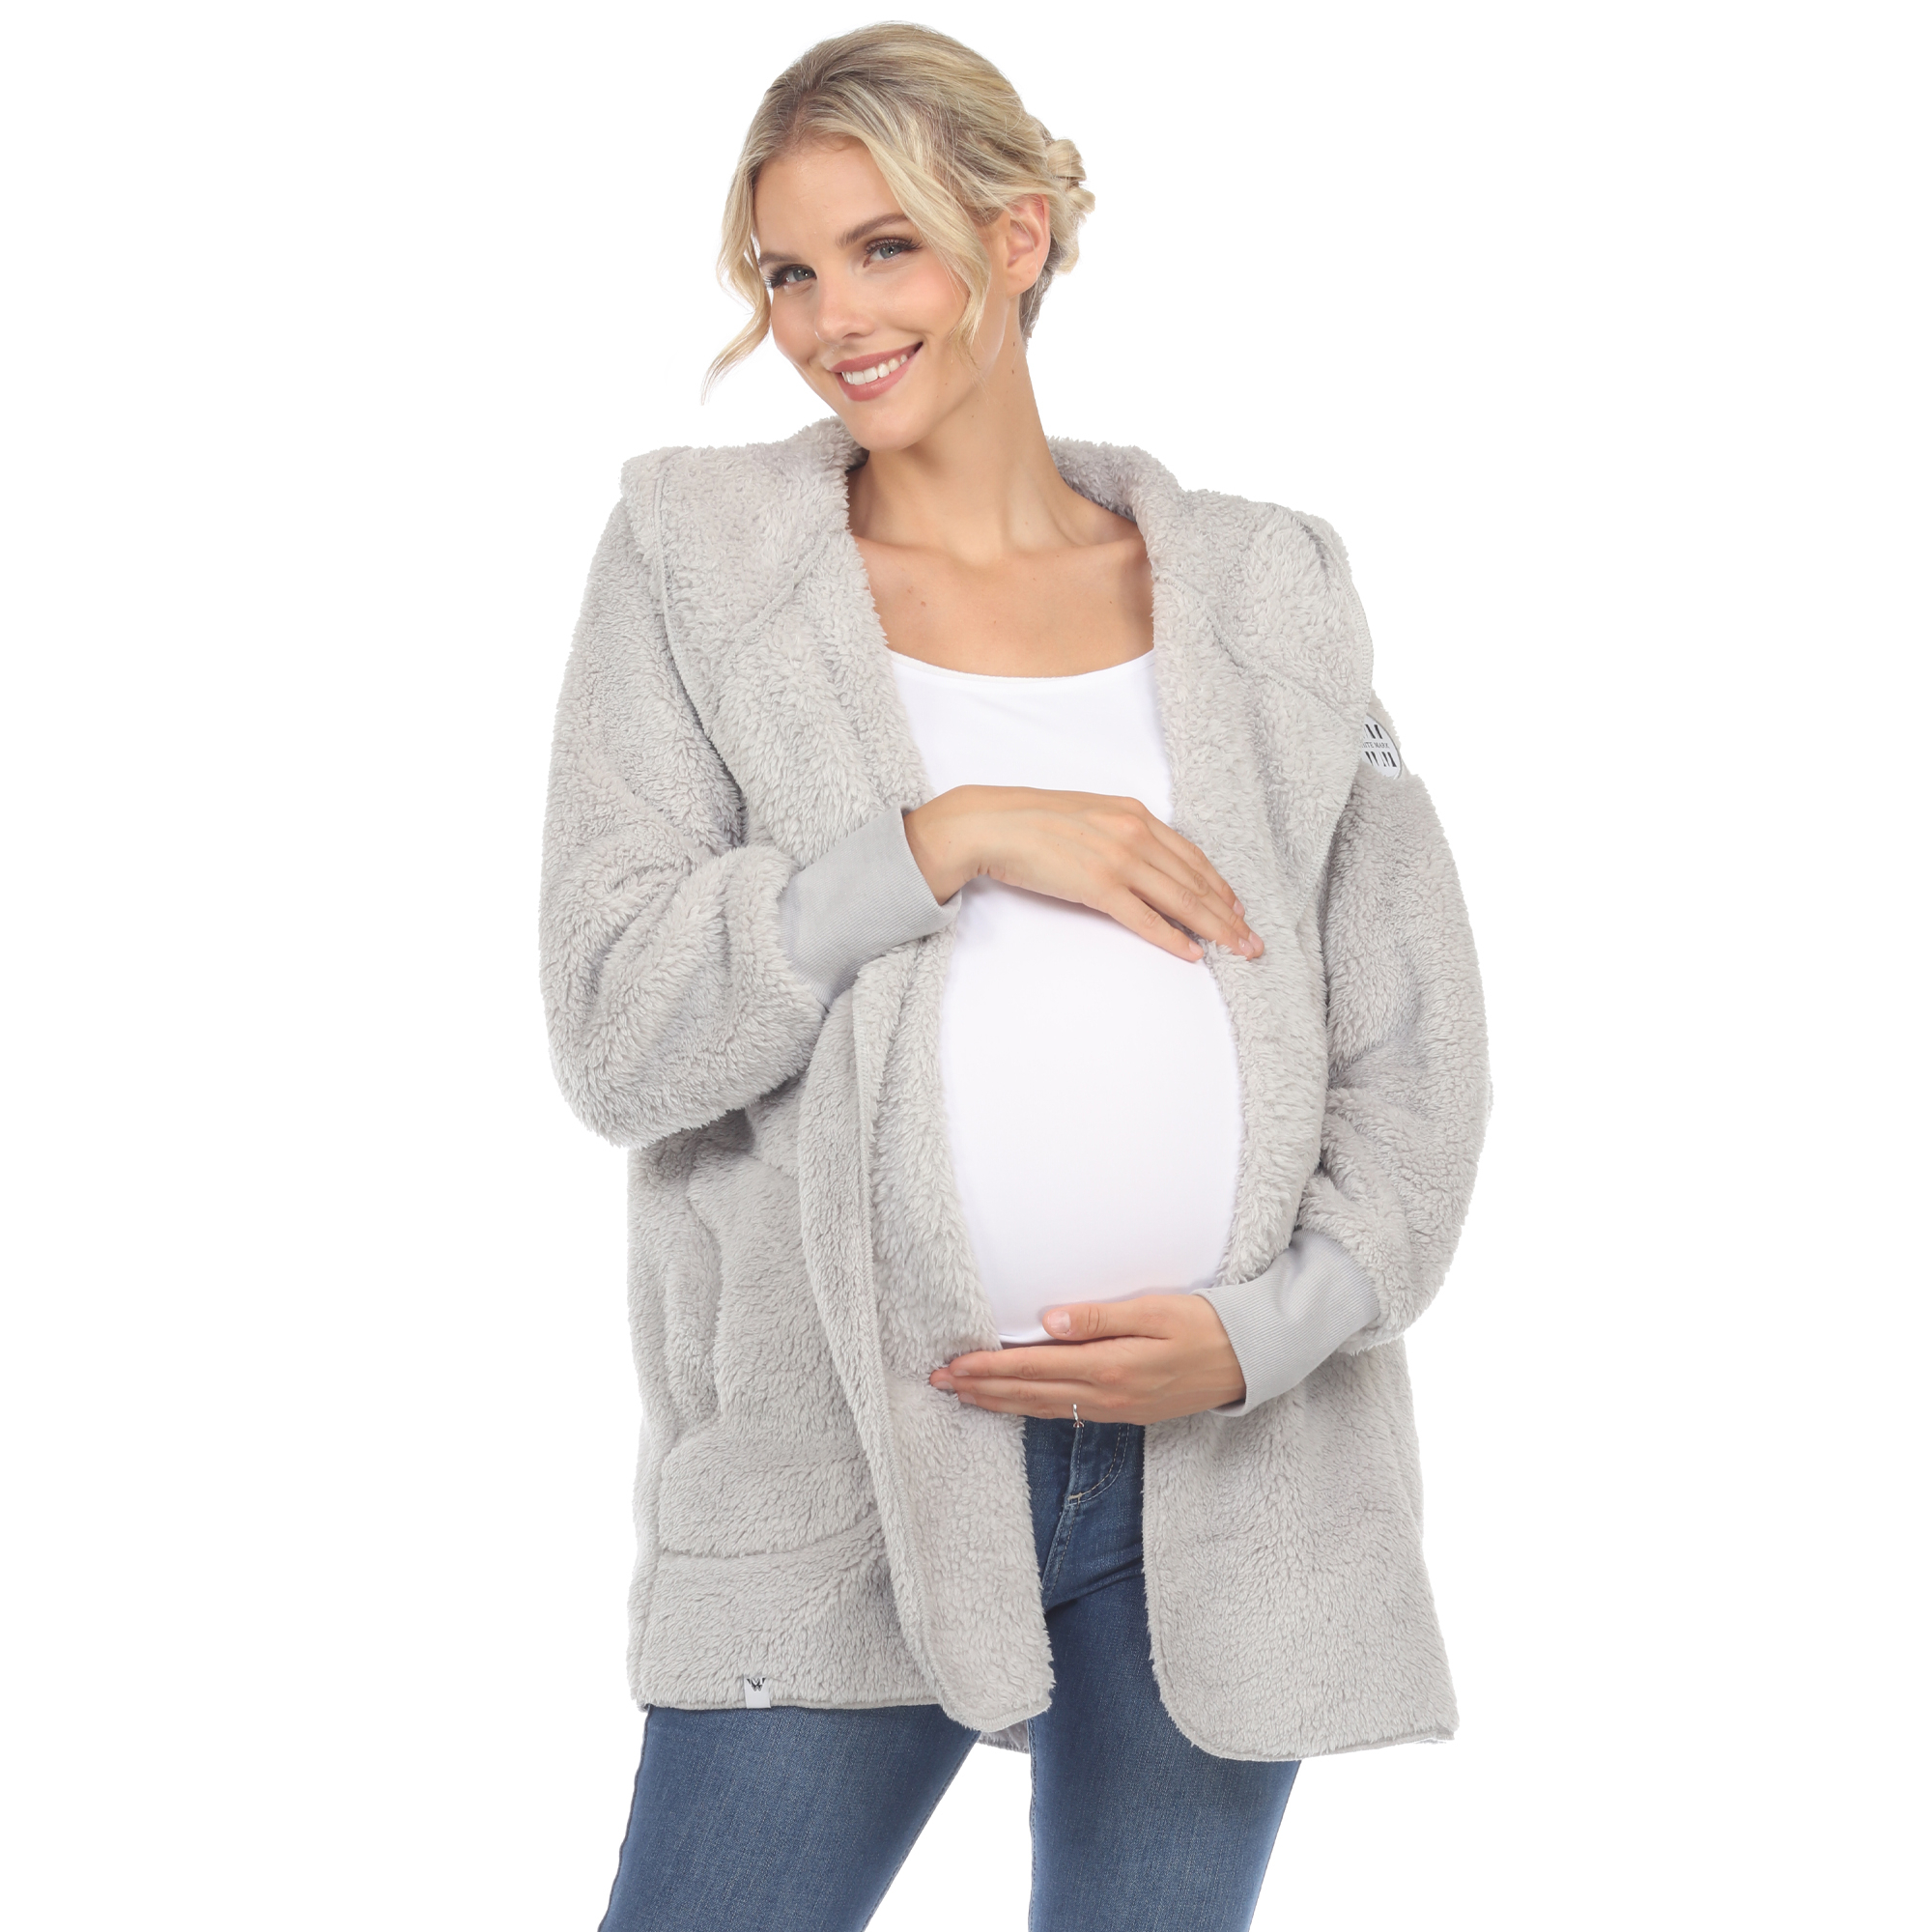 White Mark Womenâs Maternity Plush Hooded Cardigan With Pockets - Grey, L/XL